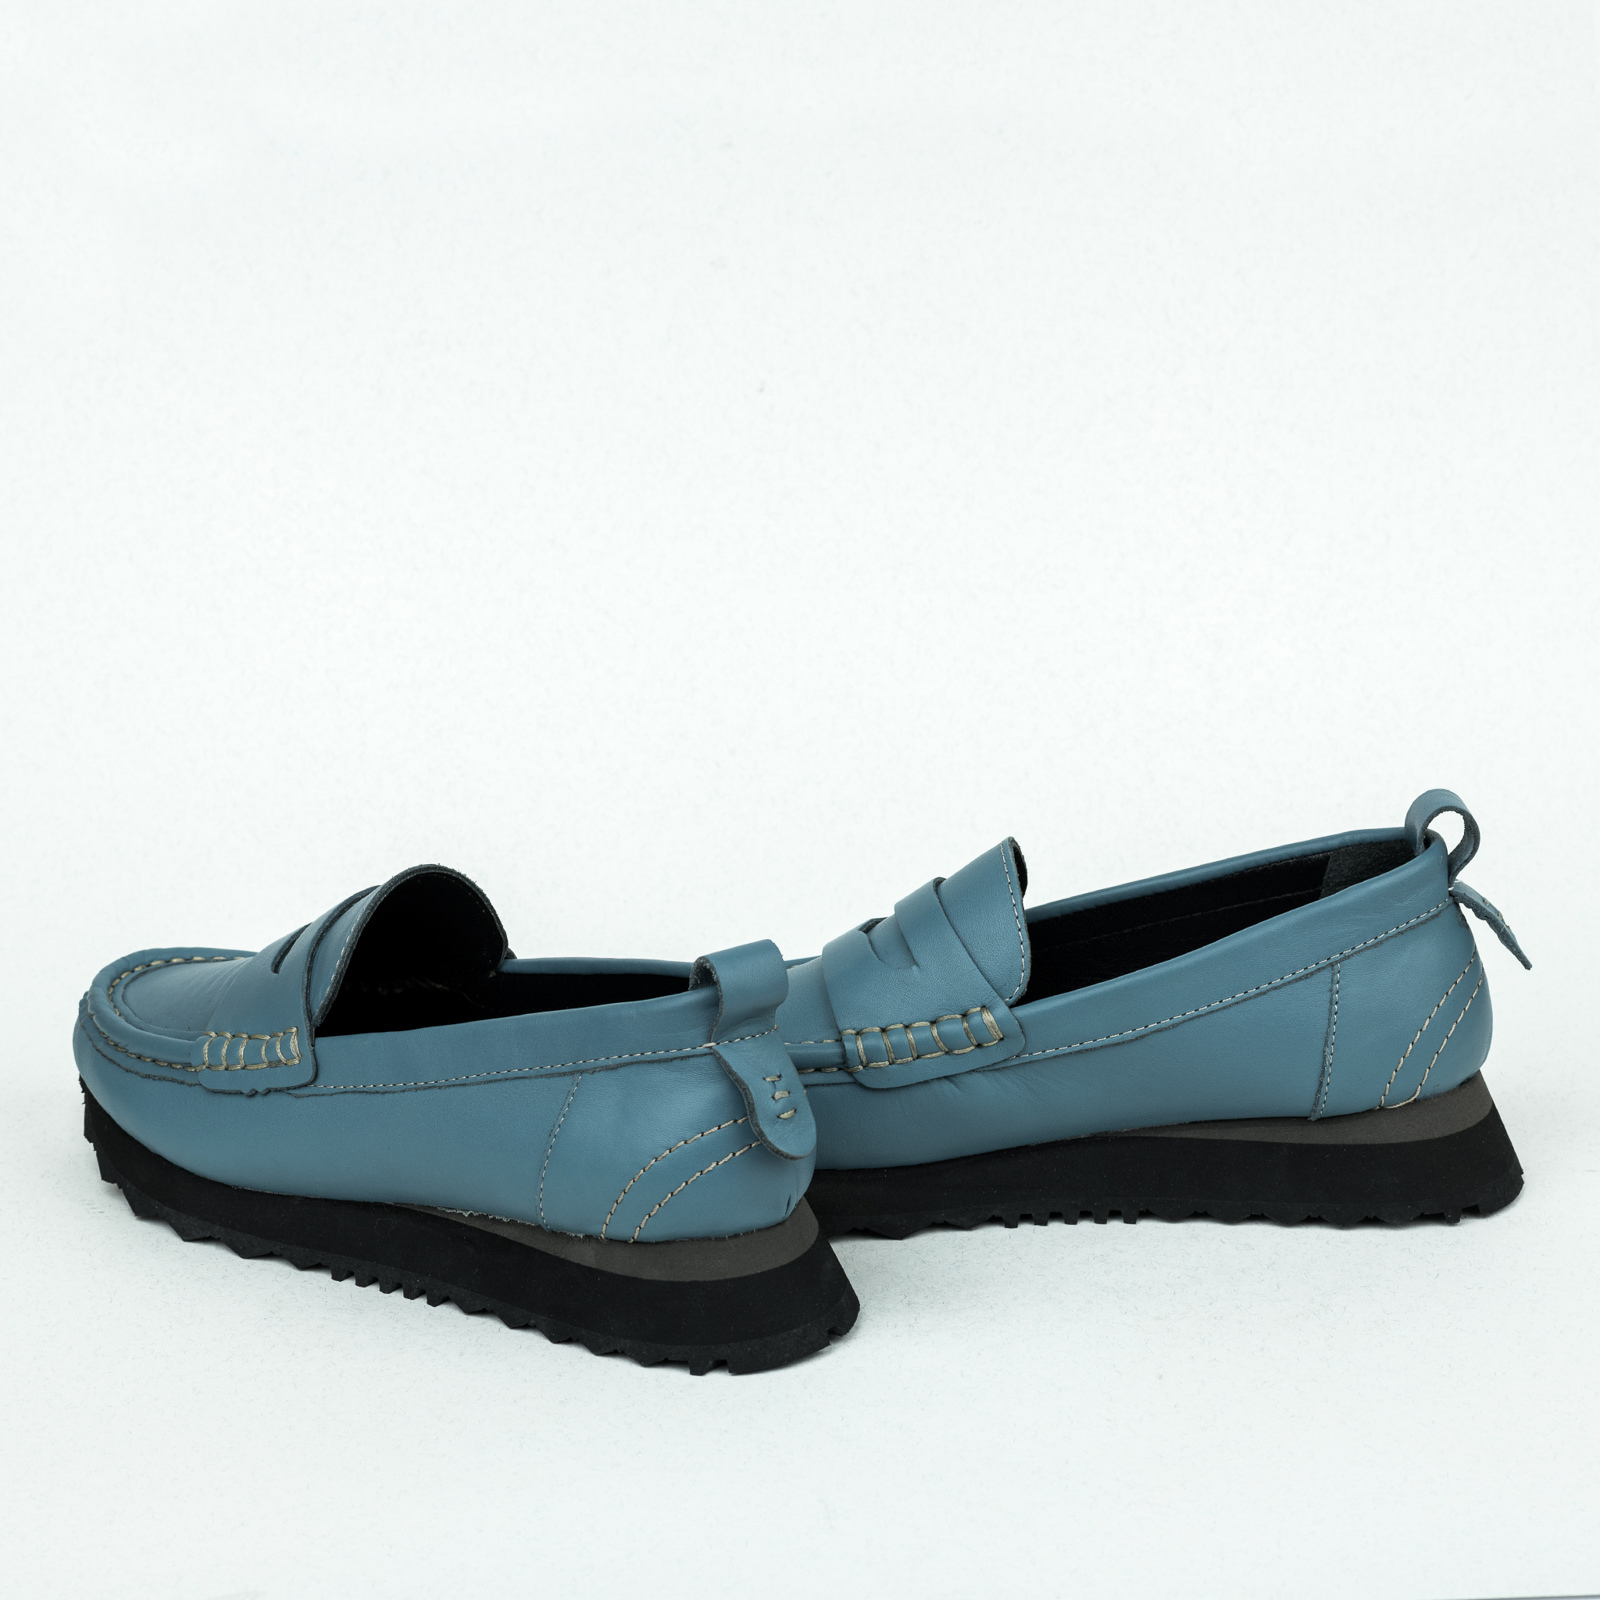 Leather shoes & flats B187 - BLUE